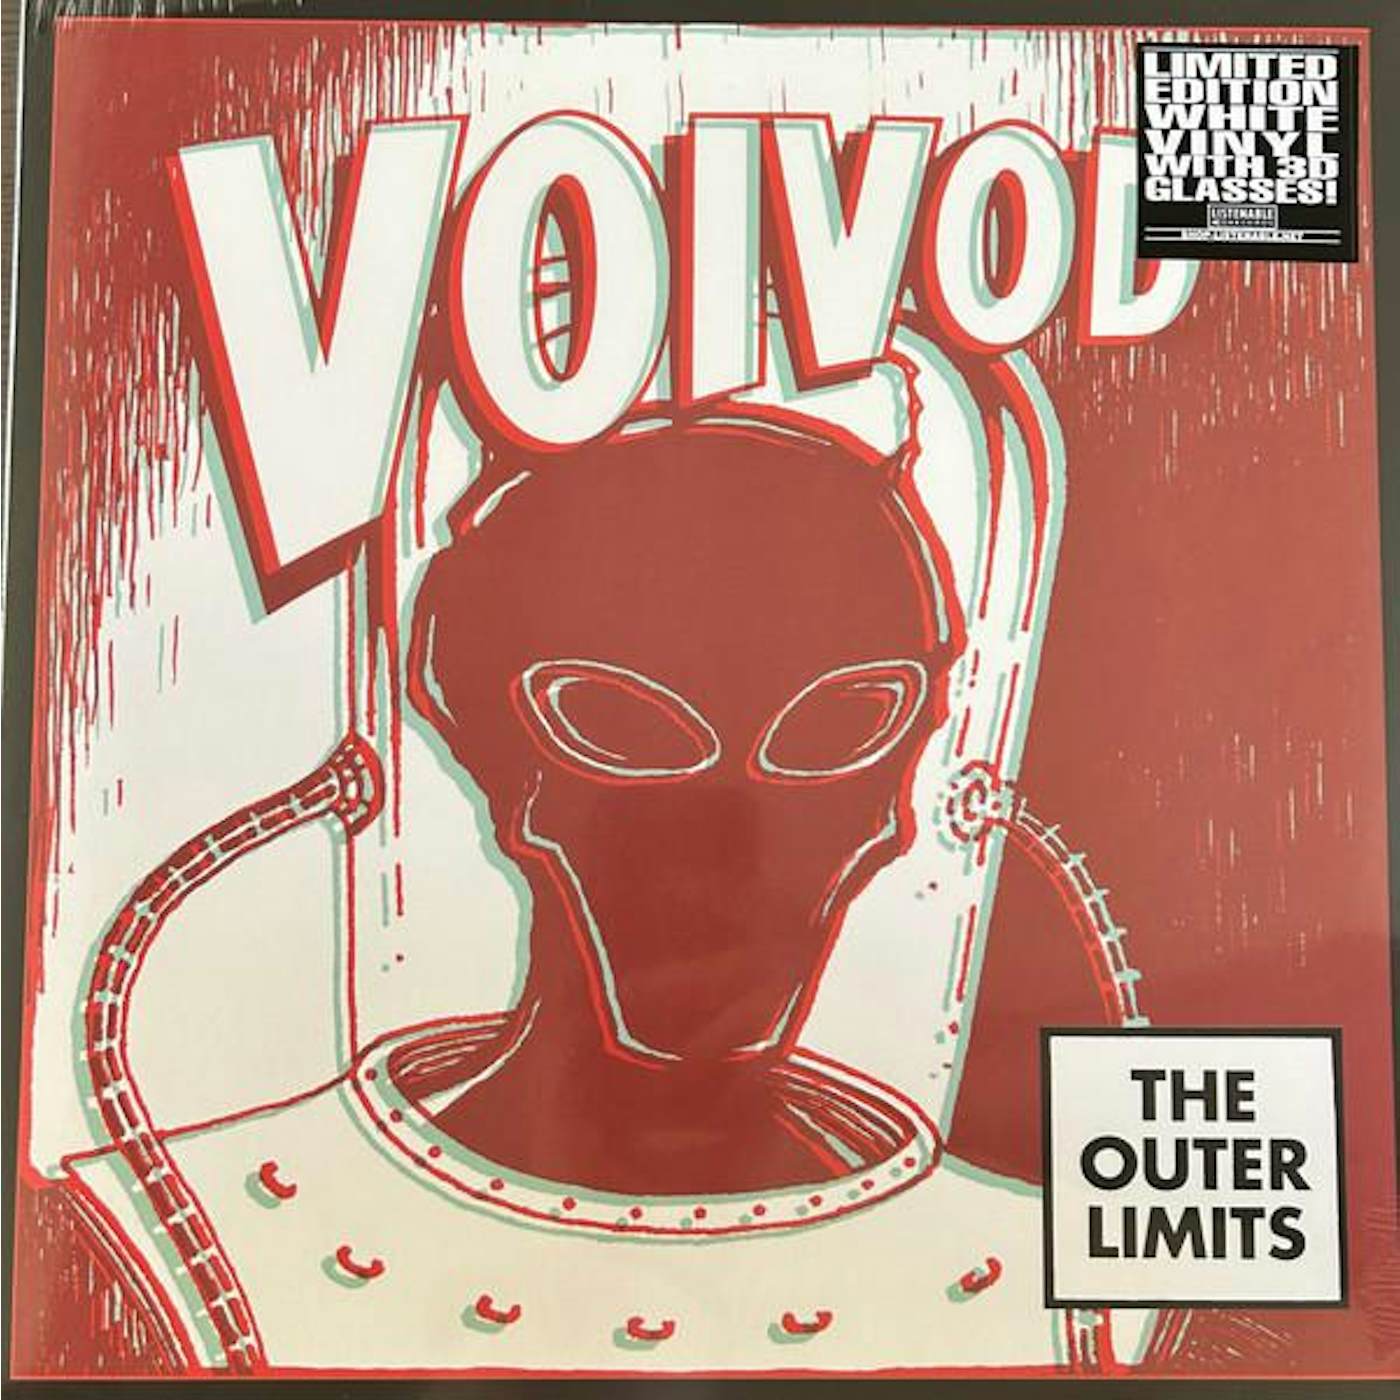 Voivod OUTER LIMITS Vinyl Record